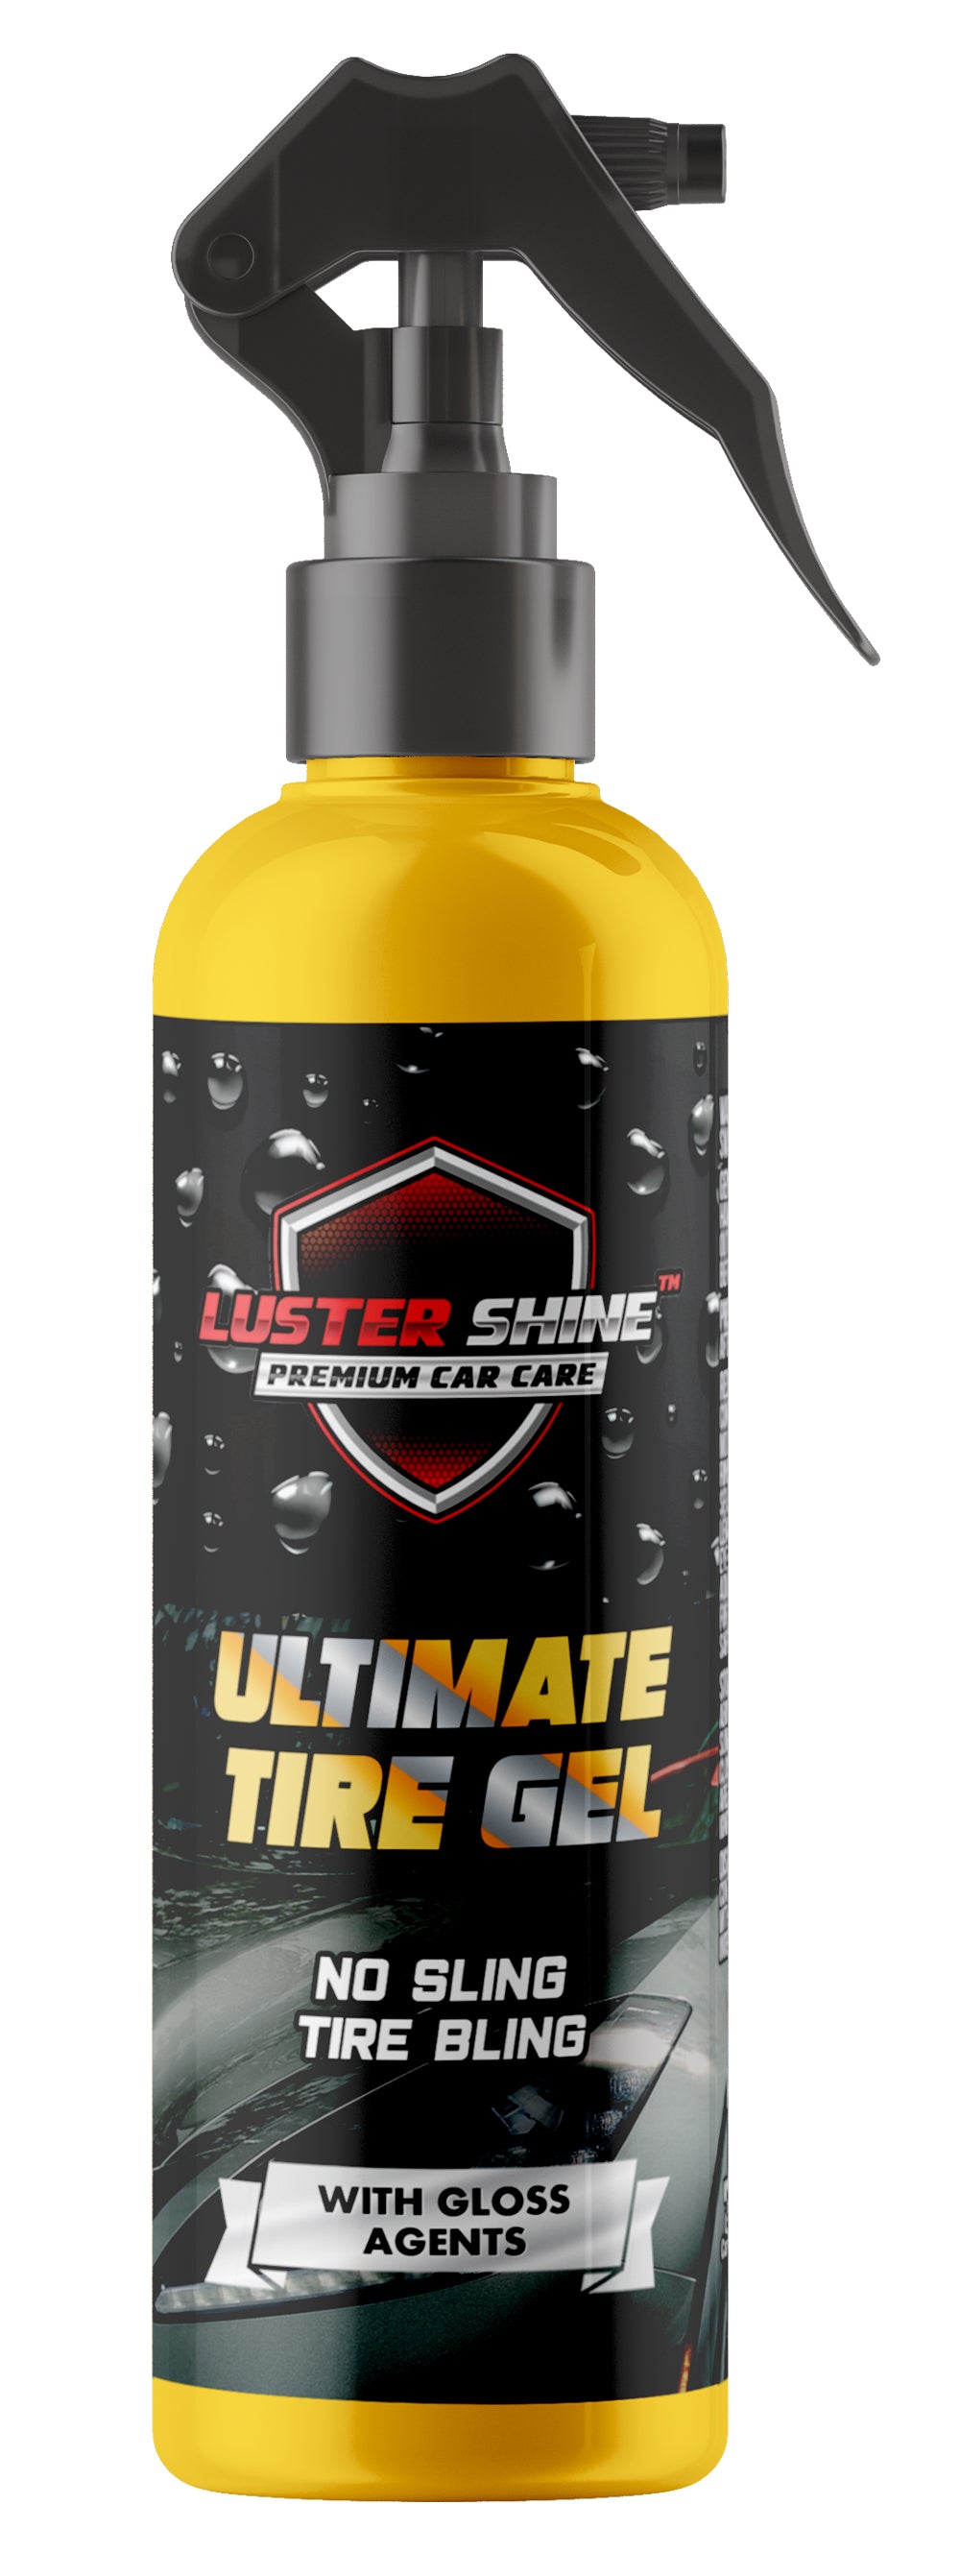 Luster Shine Ultimate Tire Gel – JMG Direct